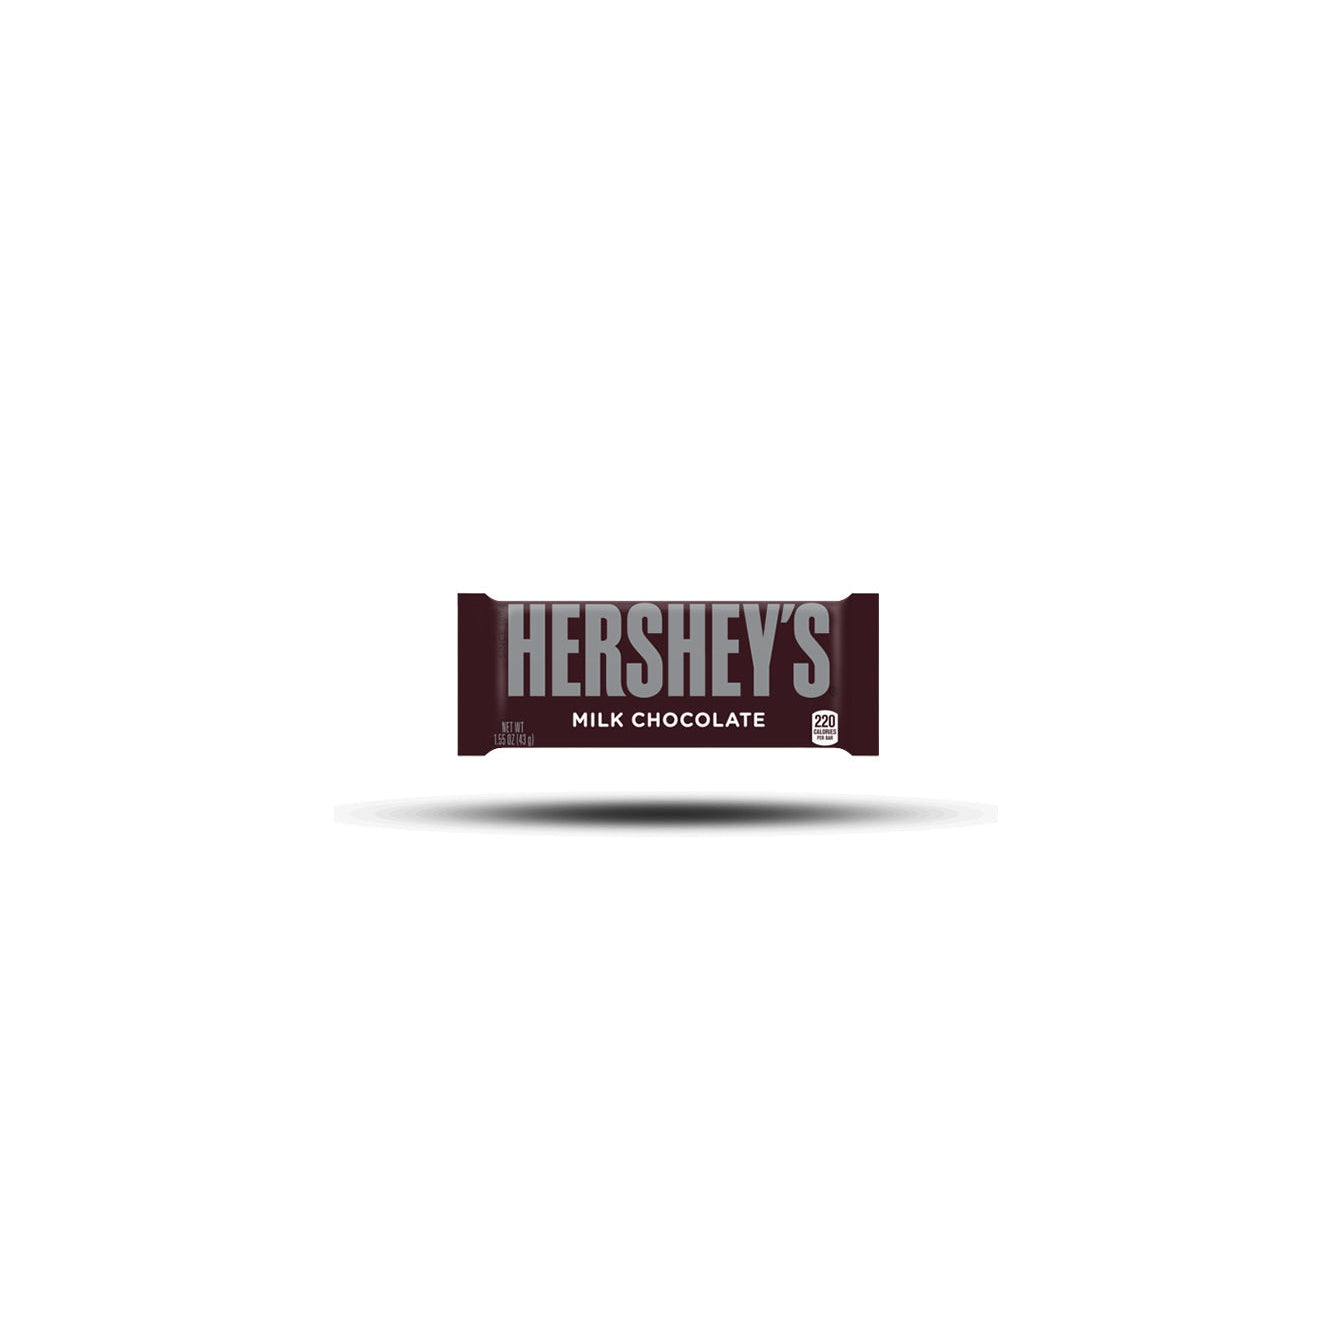 Hershey's Milk Chocolate 43g-Hershey's-SNACK SHOP AUSTRIA